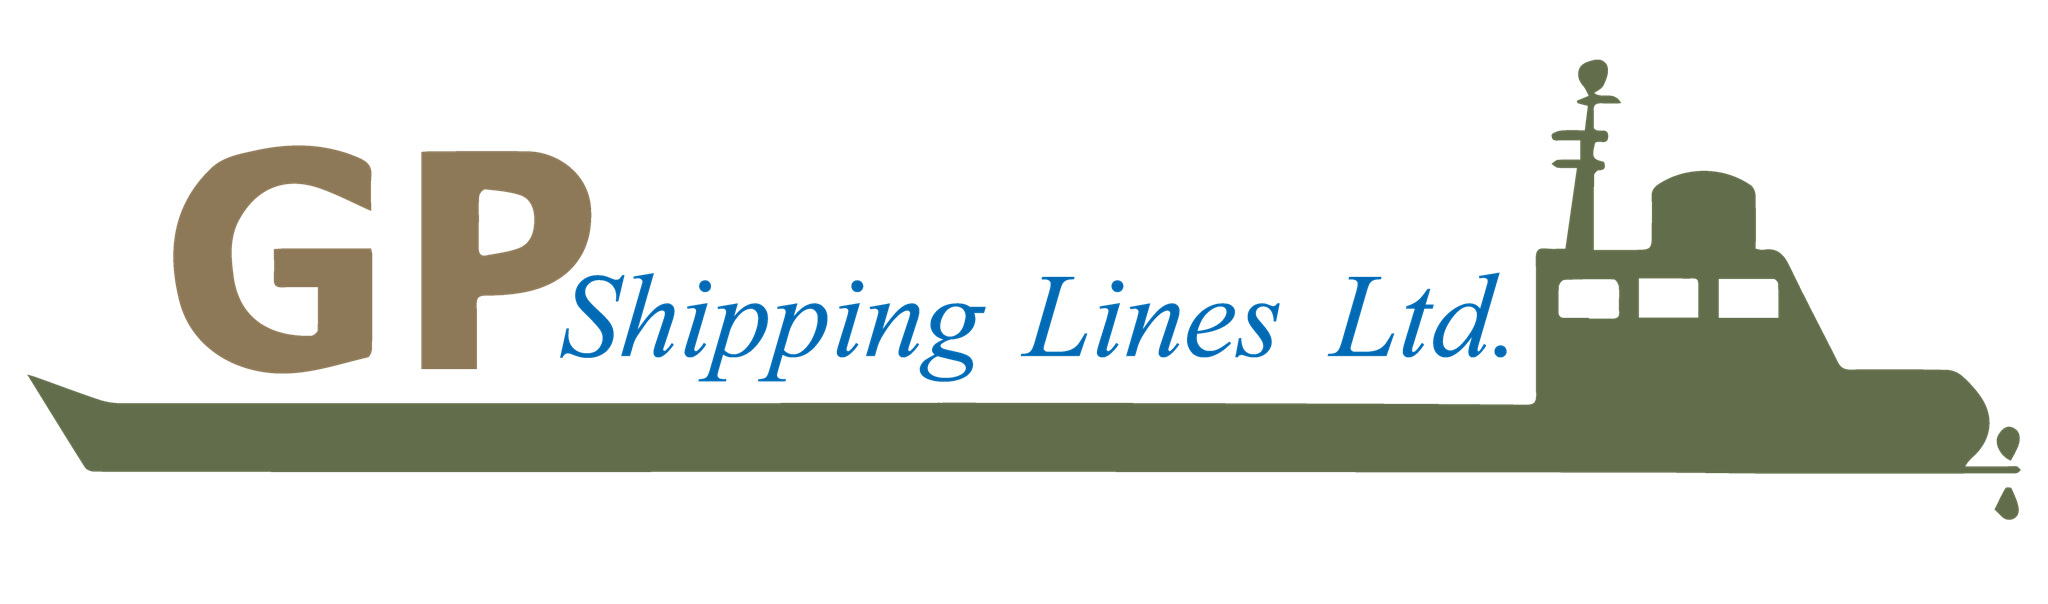 GP Shipping Lines Ltd.